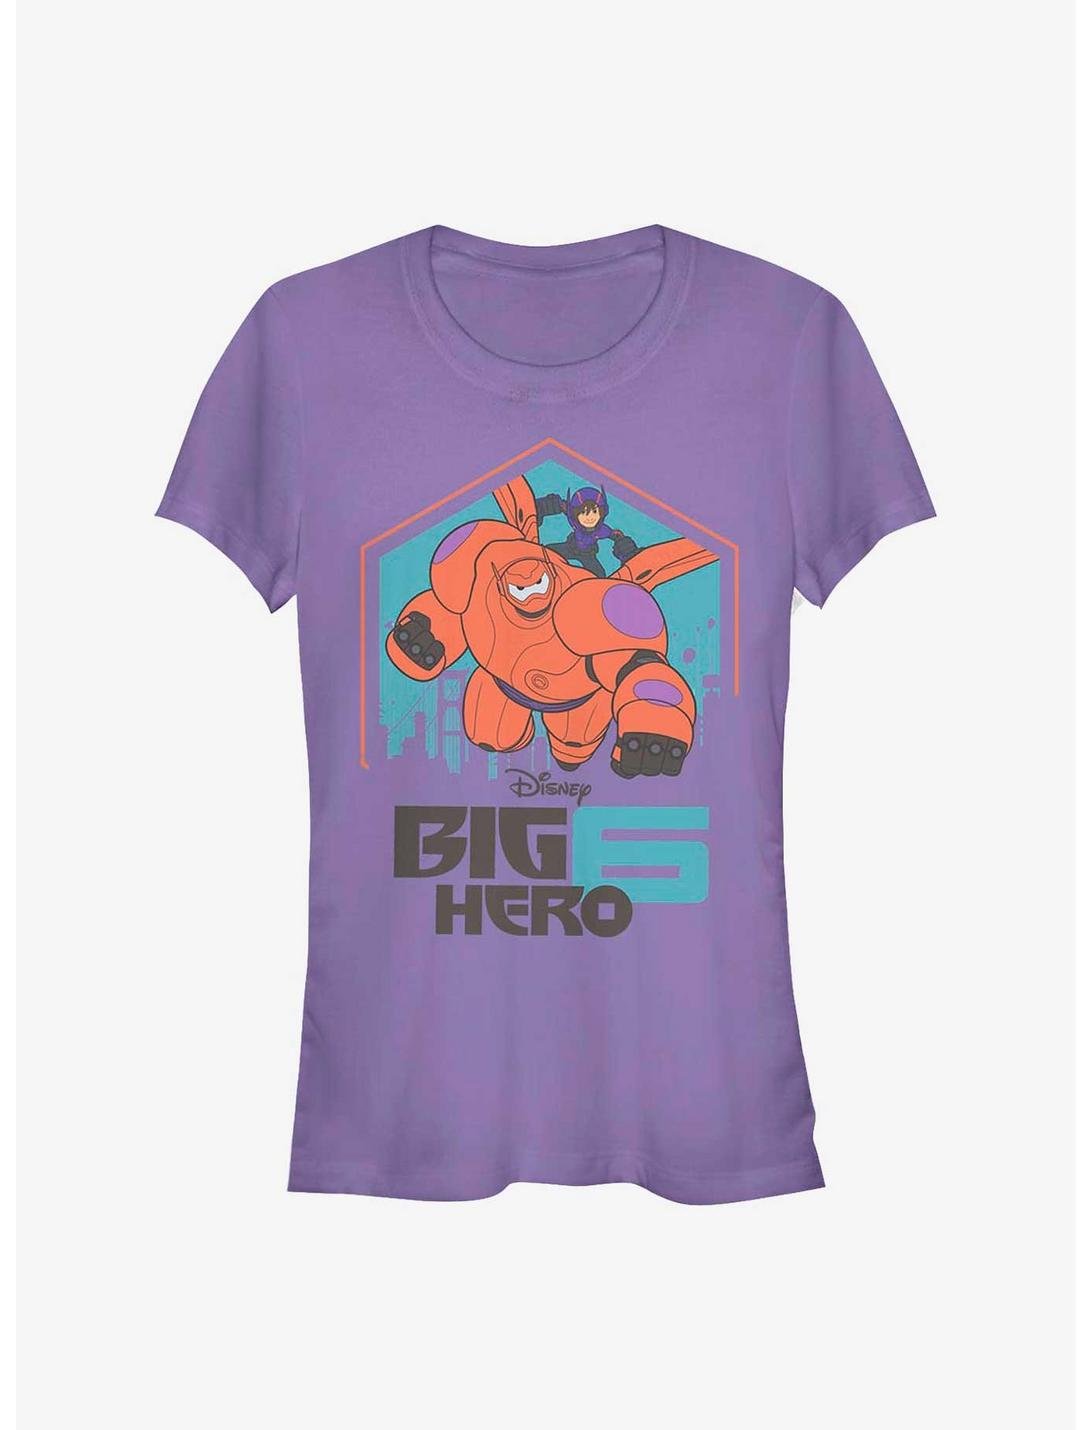 Disney Pixar Big Hero 6 Flight Girls T-Shirt, PURPLE, hi-res